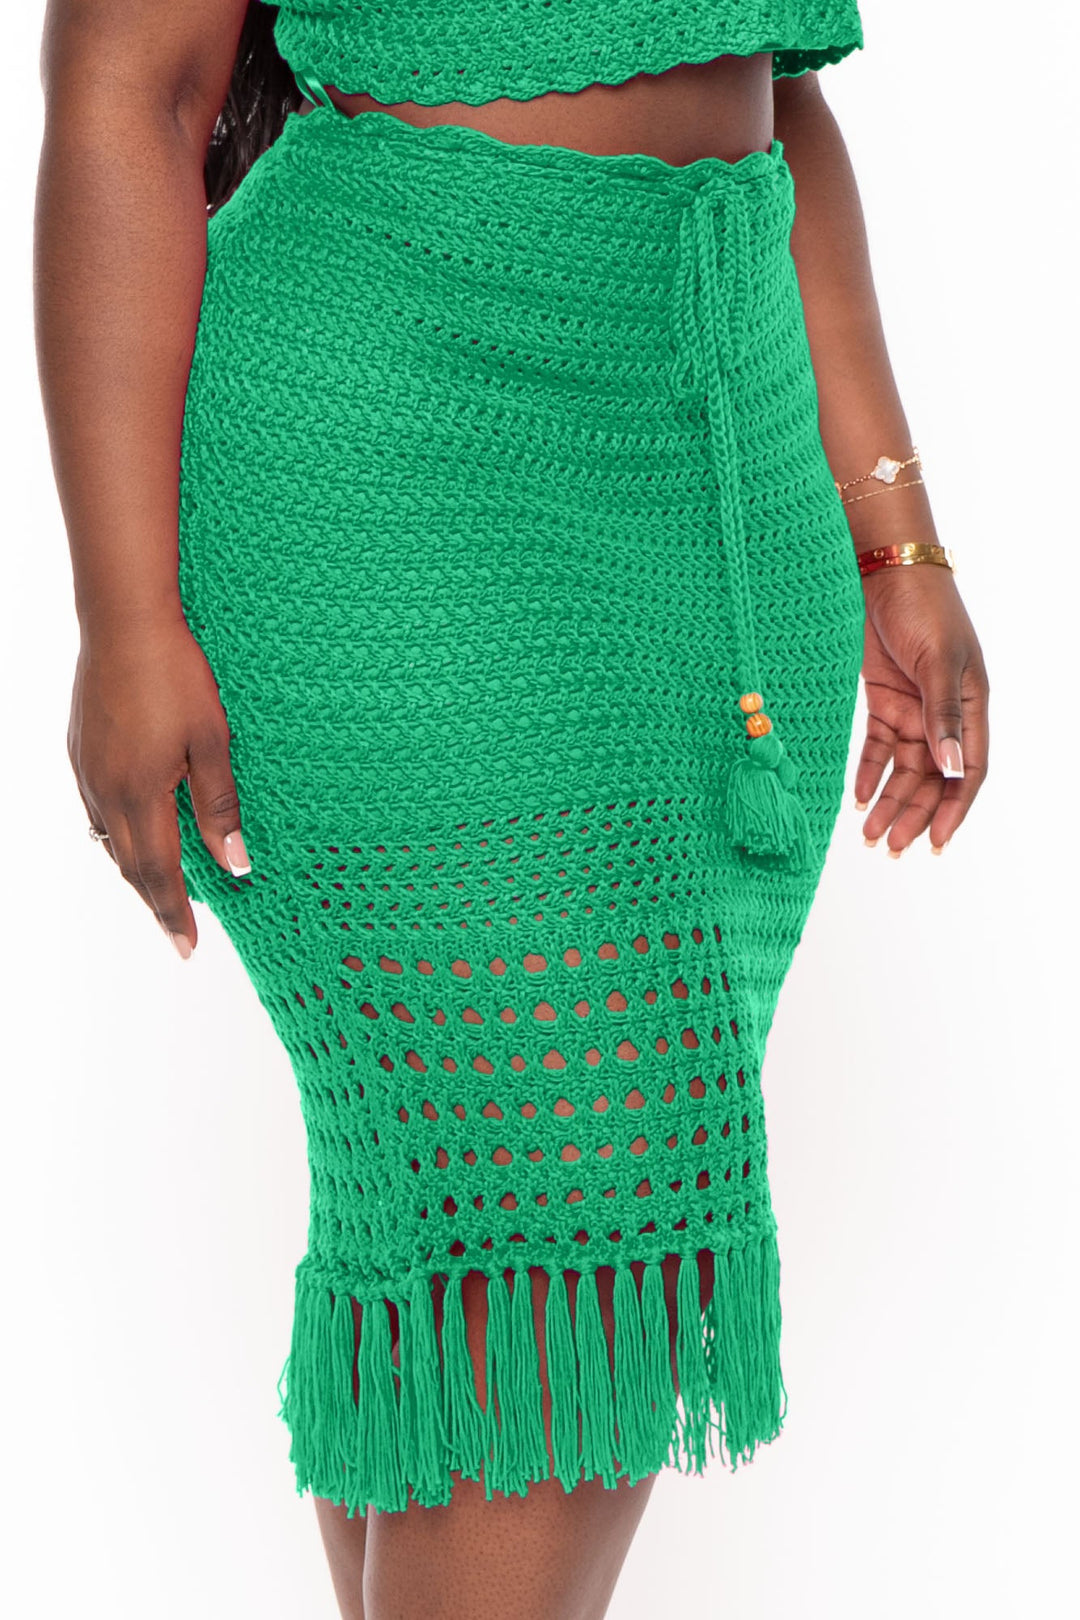 THE SANG COMPANY Matching Sets Plus Size Bailey Crochet 2pc  Matching Set - Green